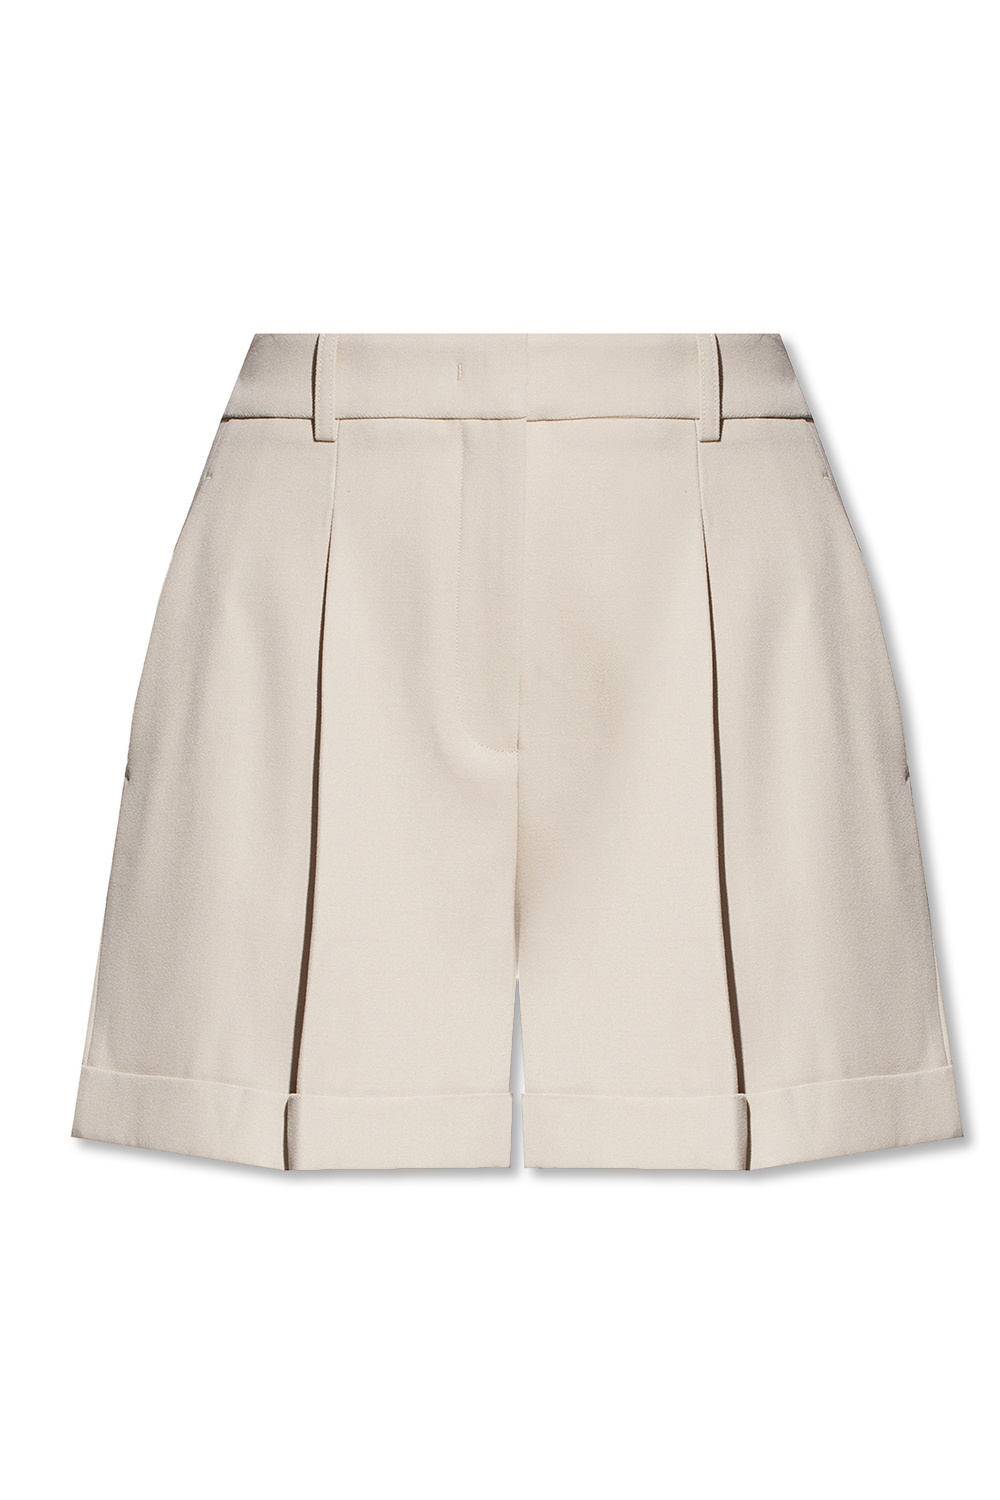 Michael Kors Pleat-front shorts